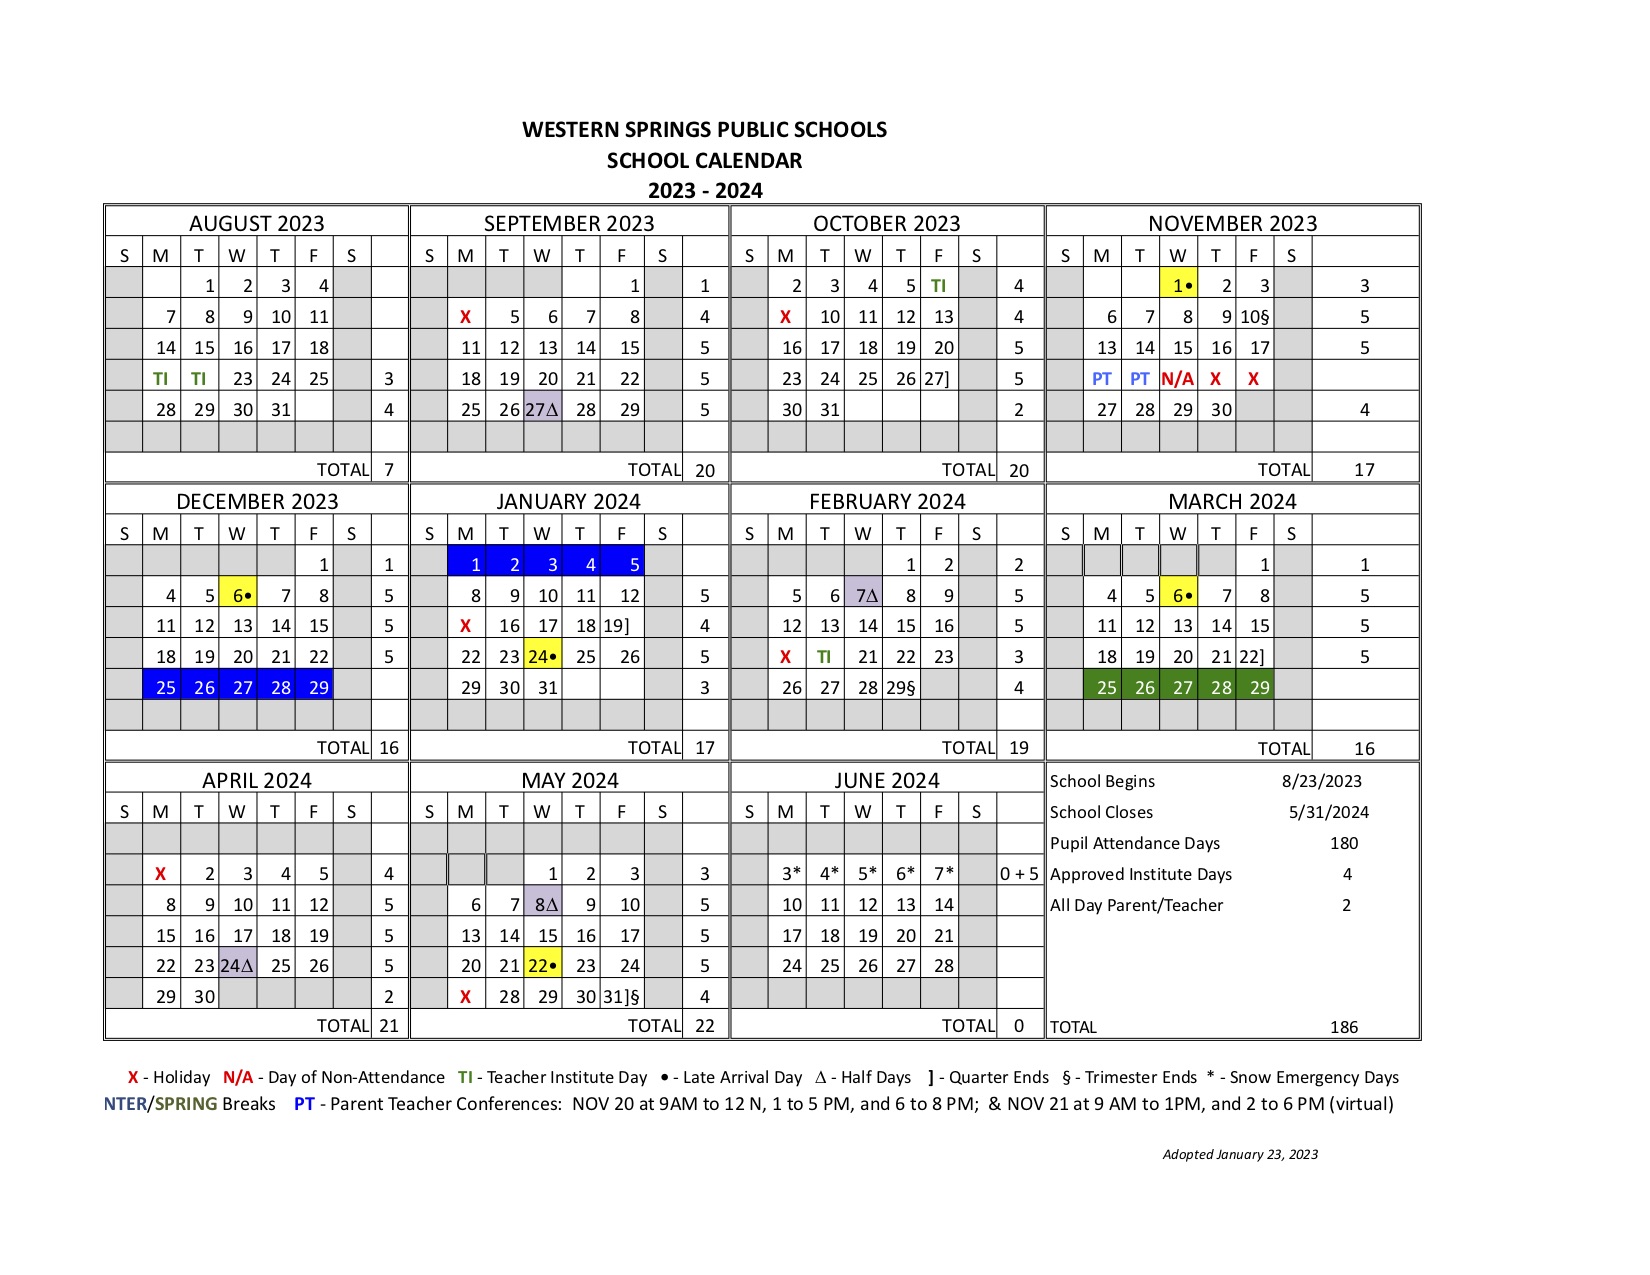 2023-2024 district calendar at a glance